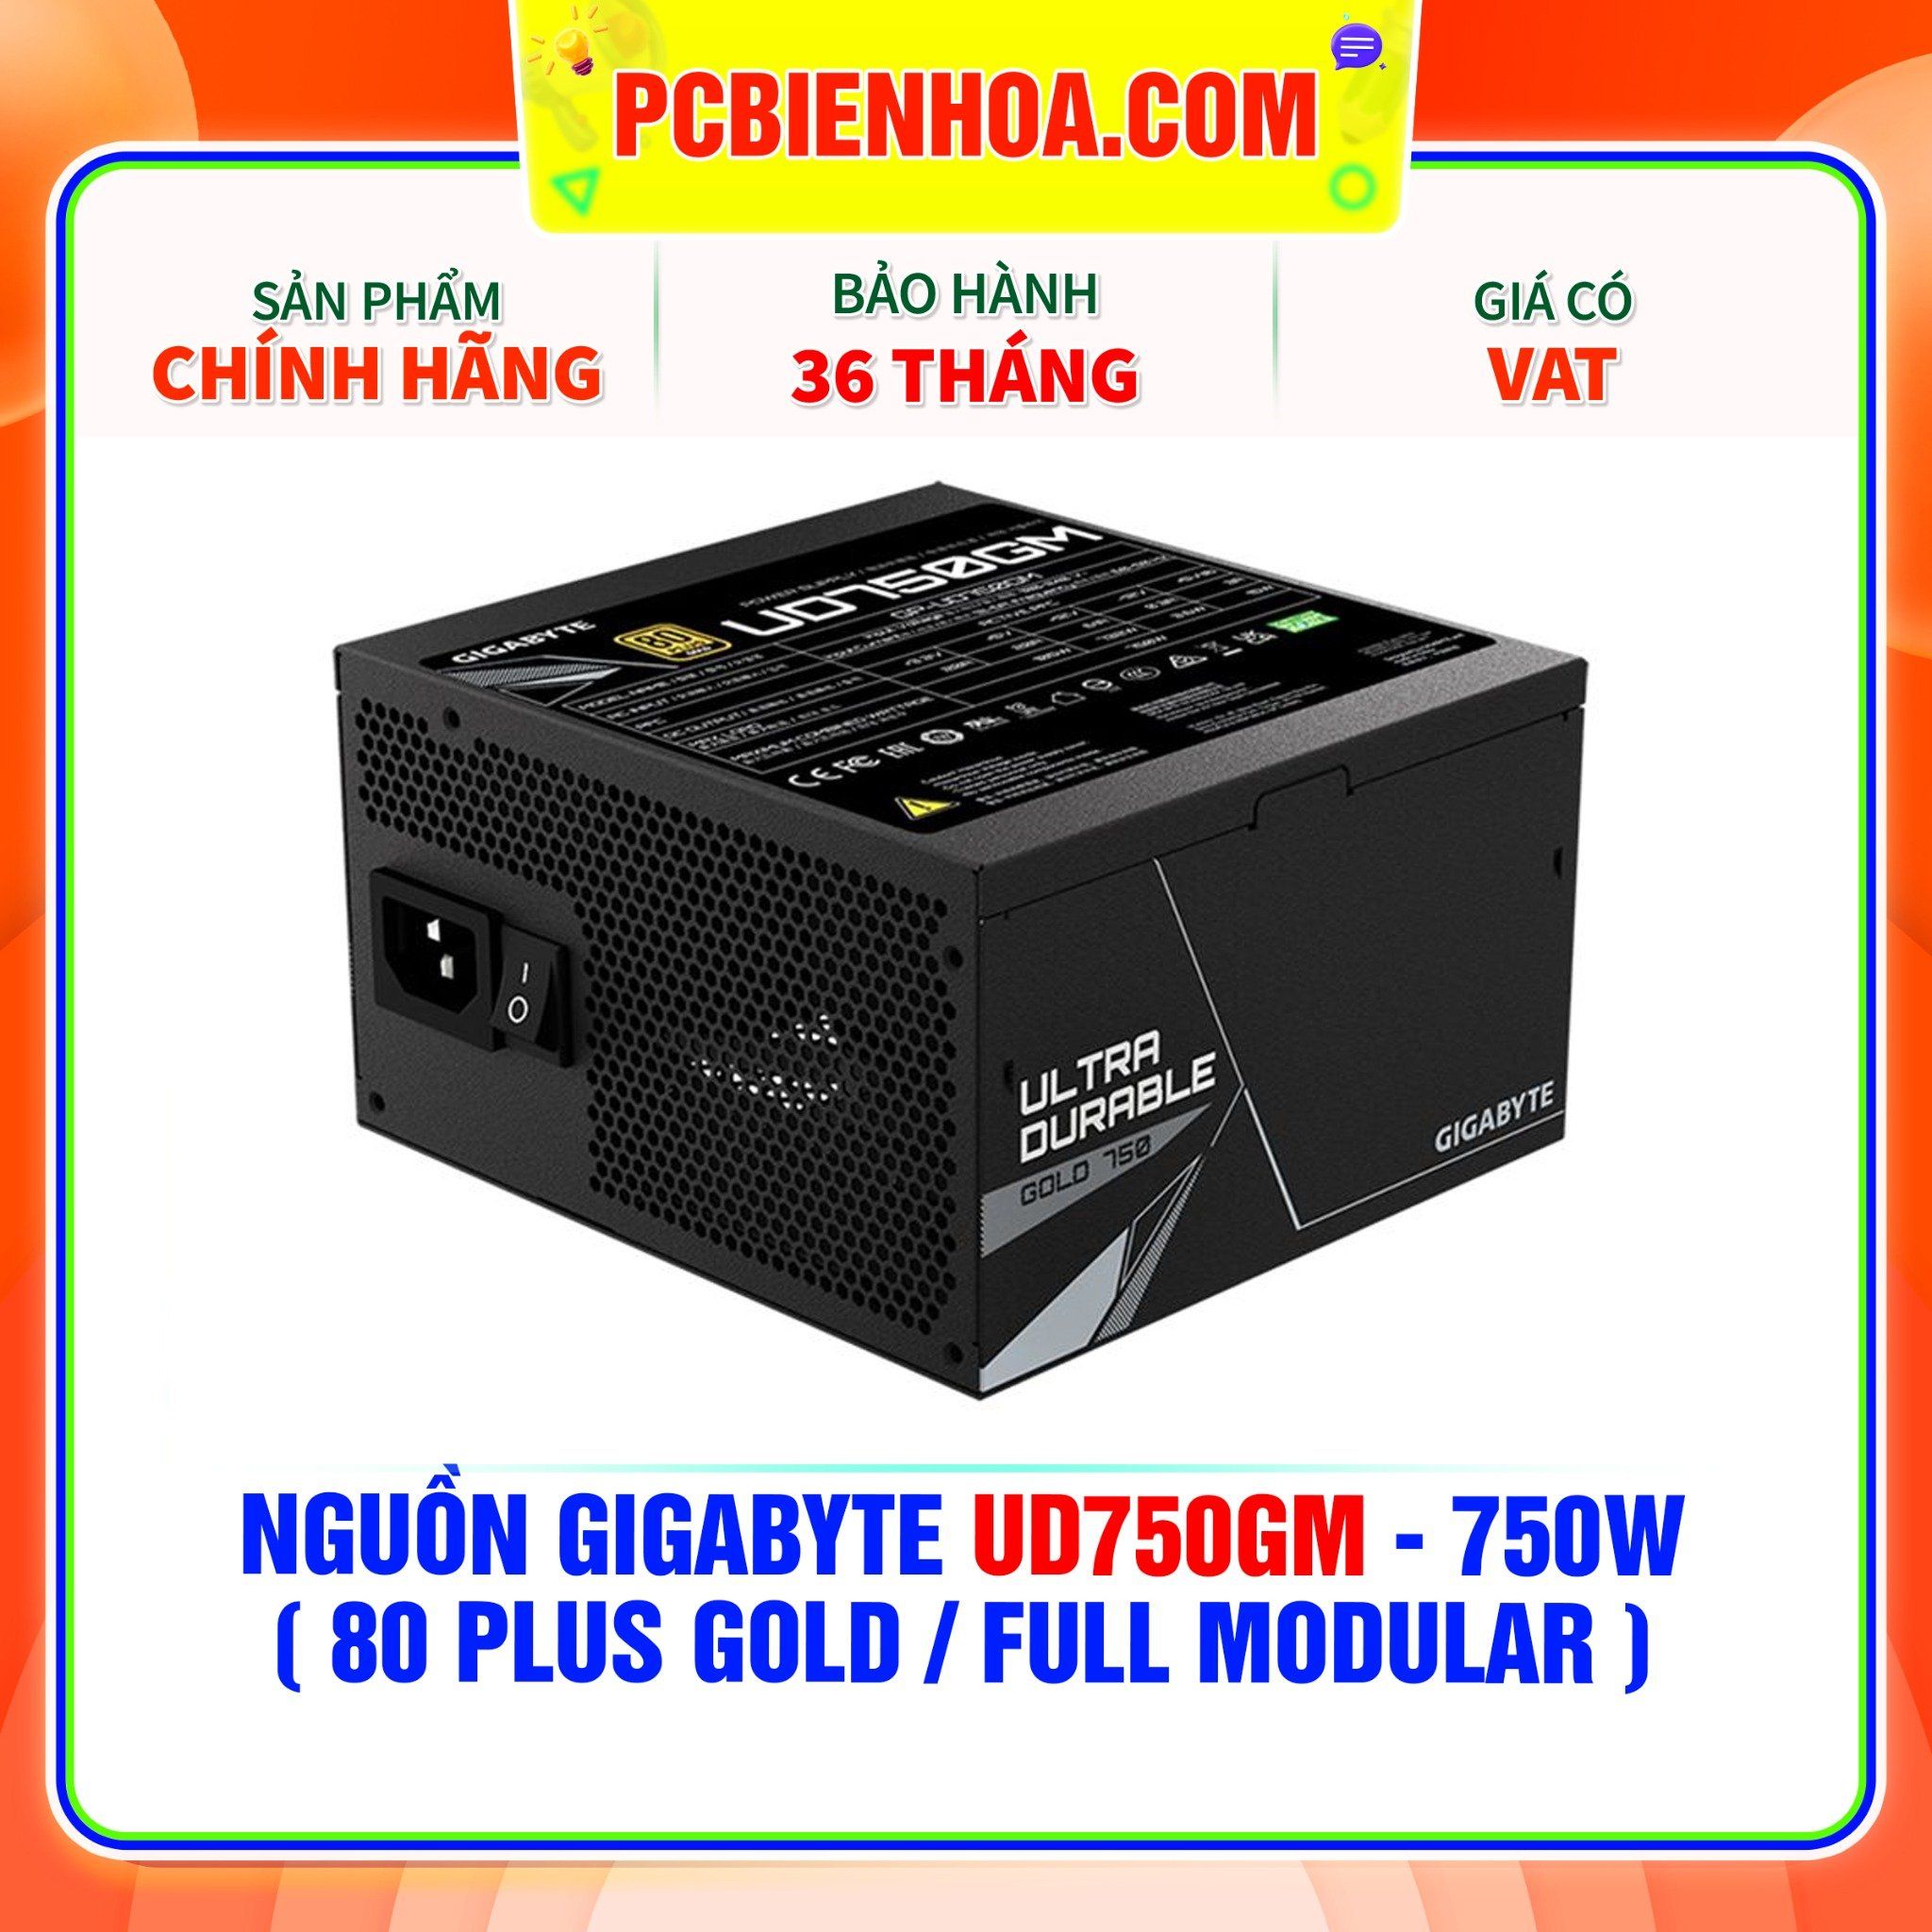  NGUỒN GIGABYTE UD750GM - 750W ( 80 PLUS GOLD / FULL MODULAR ) 